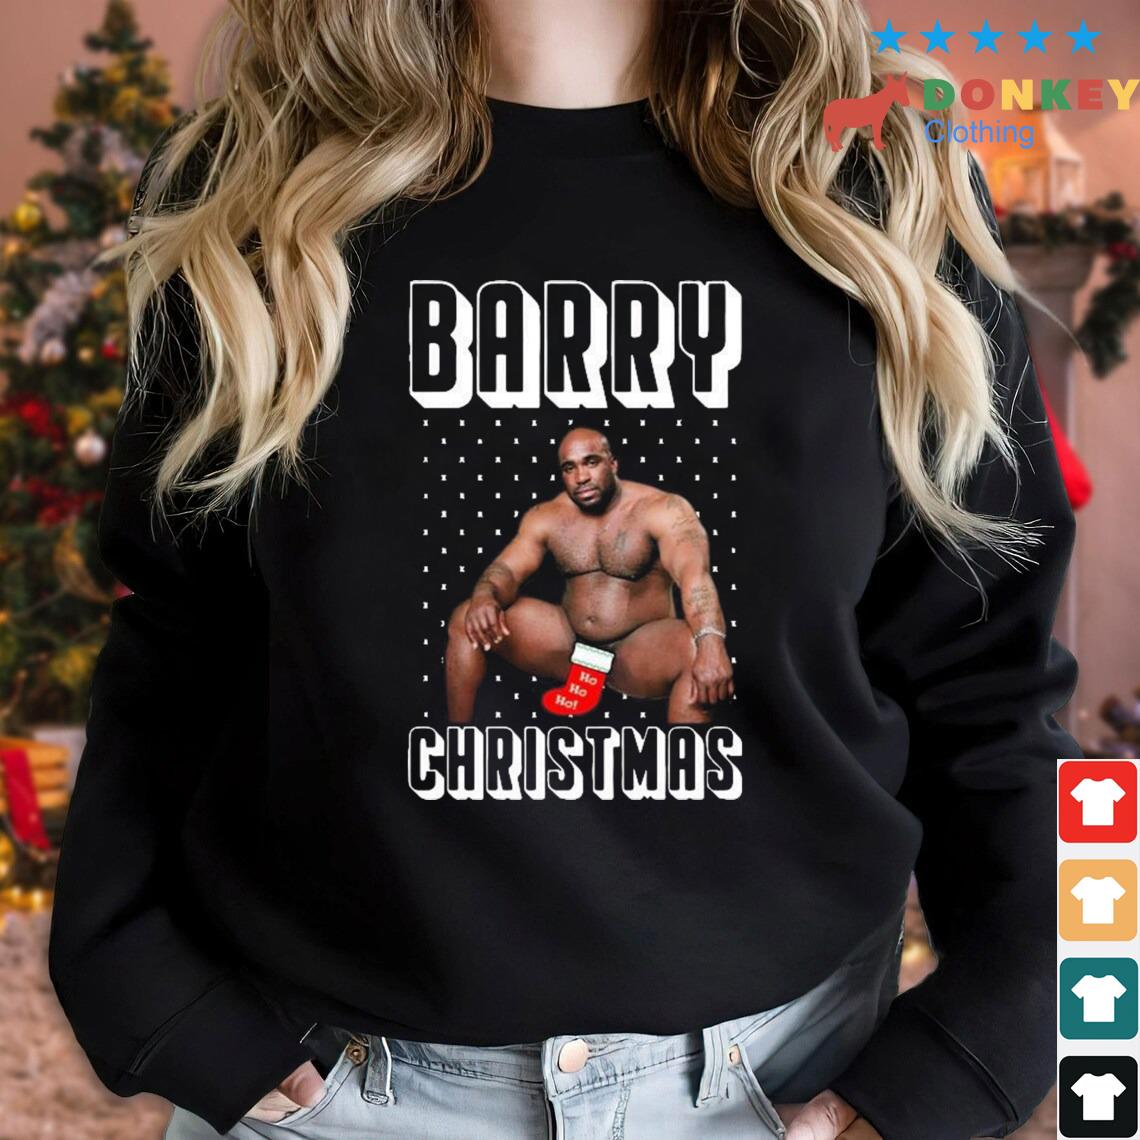 Barry Wood Merchandise Ho Ho Ho Ugly Christmas Sweater